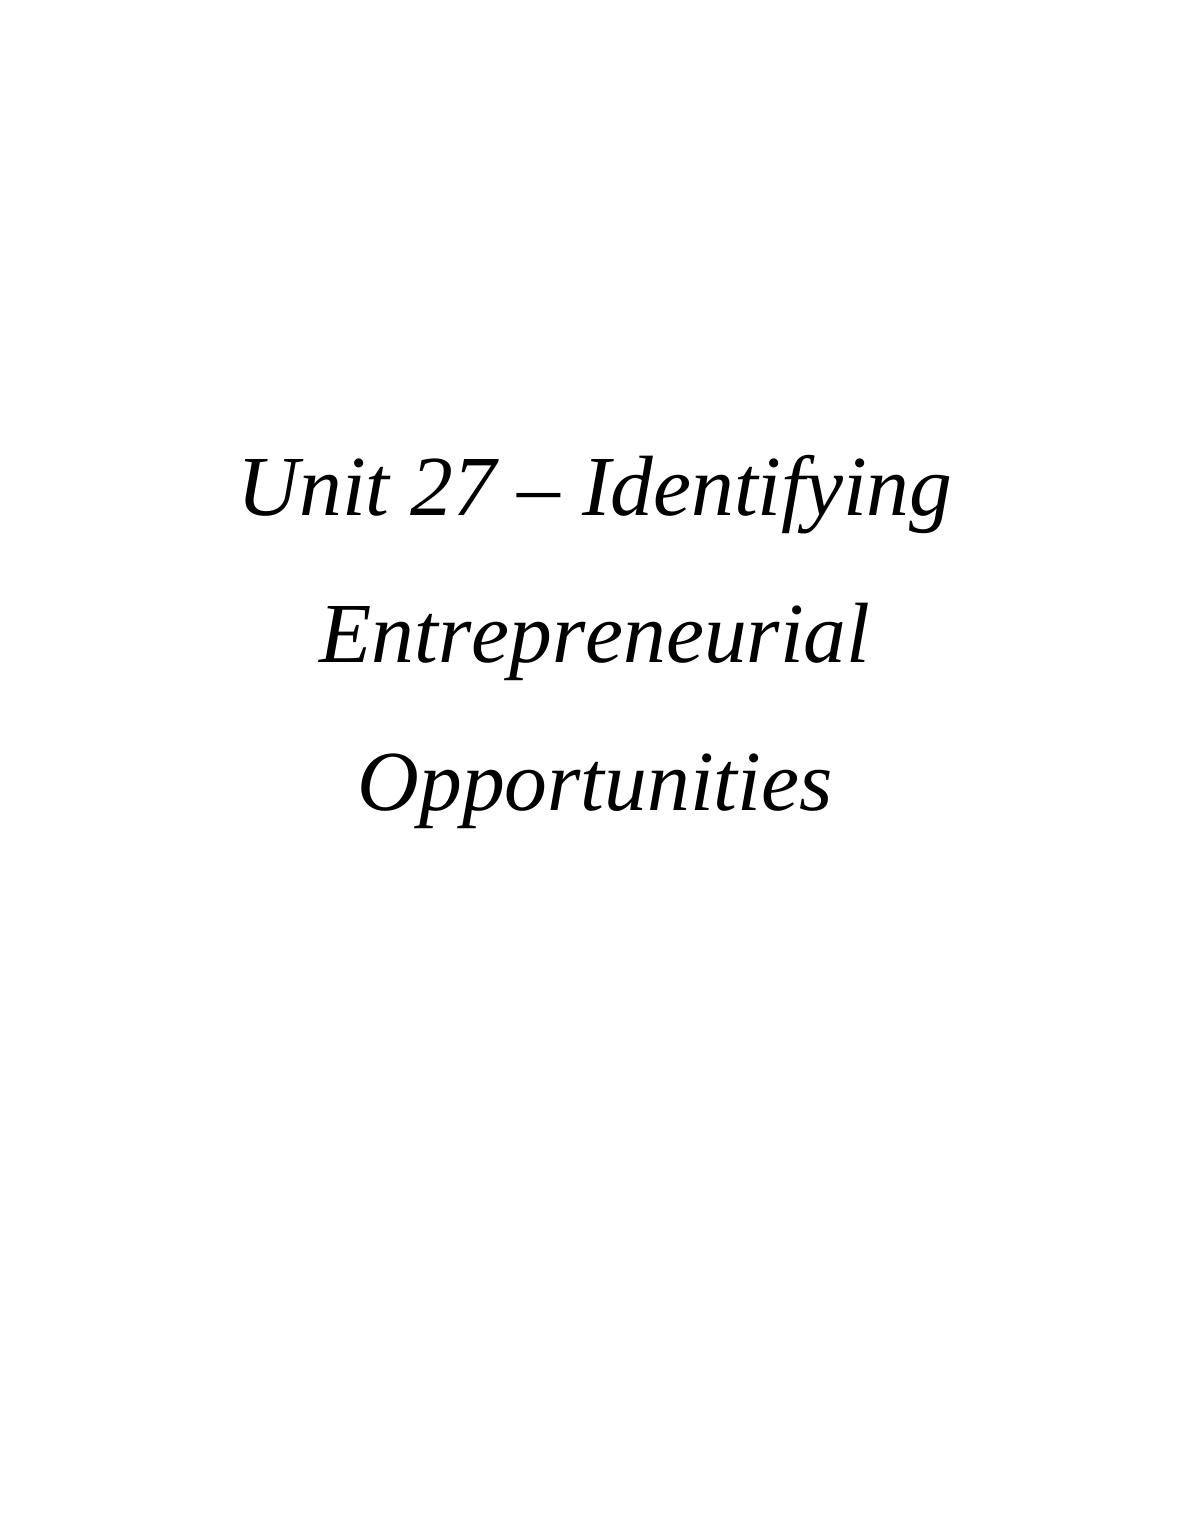 Unit 27– Identifying Entrepreneurial Opportunities_1